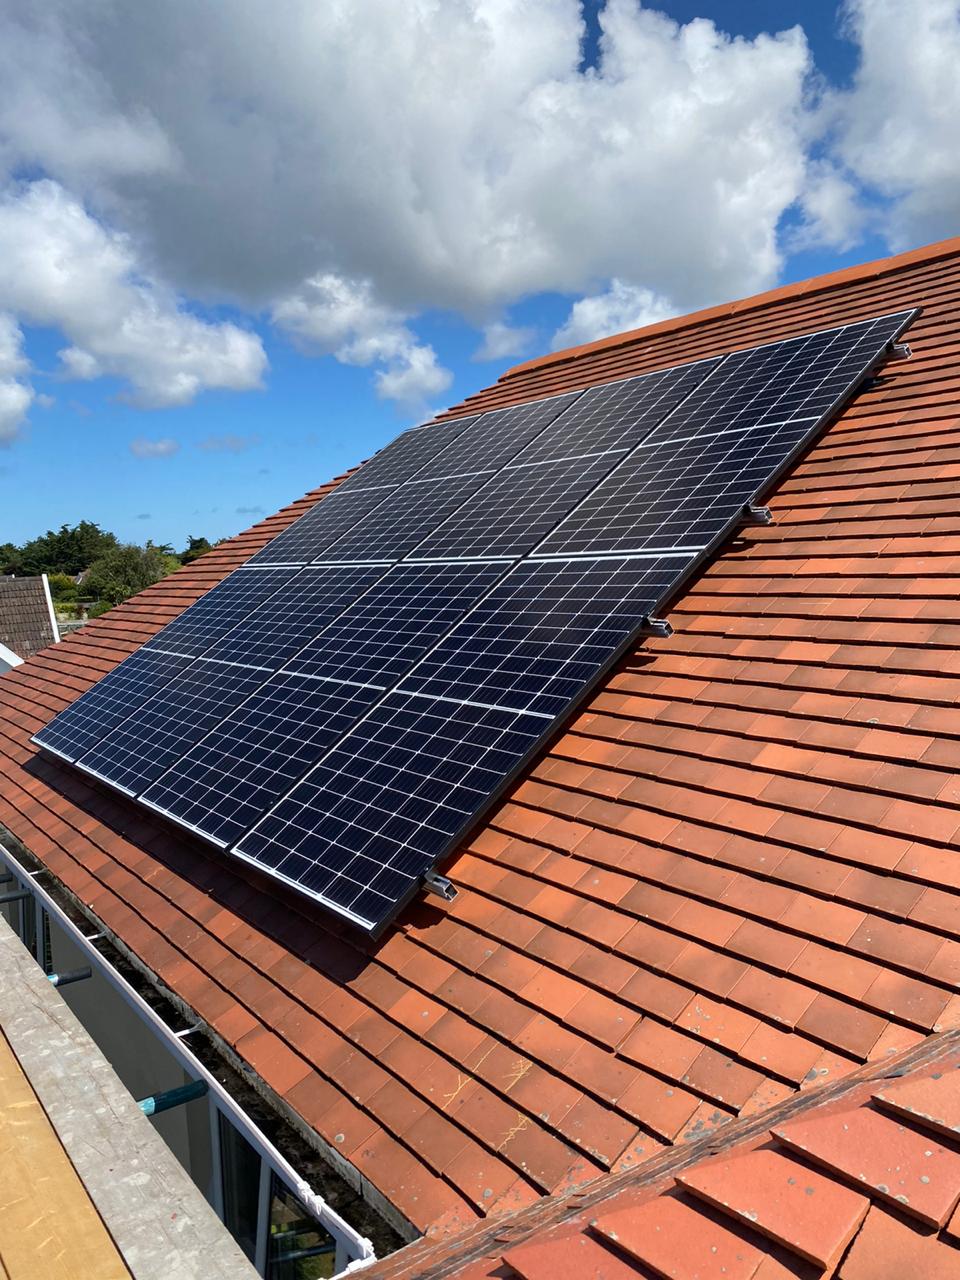 Solar panel array on roof